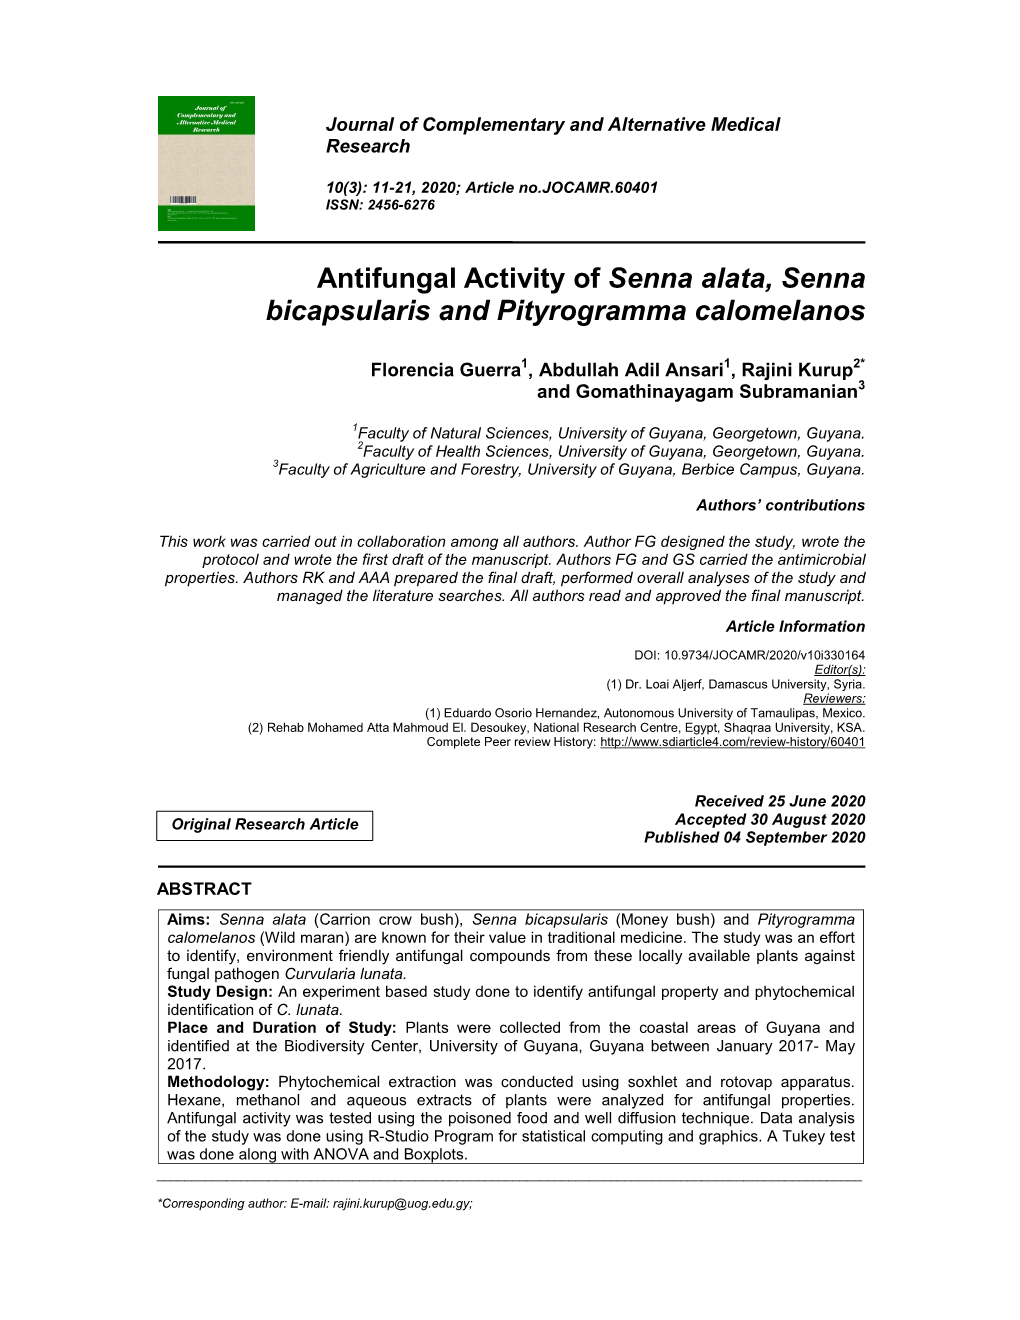 Antifungal Activity of Senna Alata, Senna Bicapsularis and Pityrogramma Calomelanos